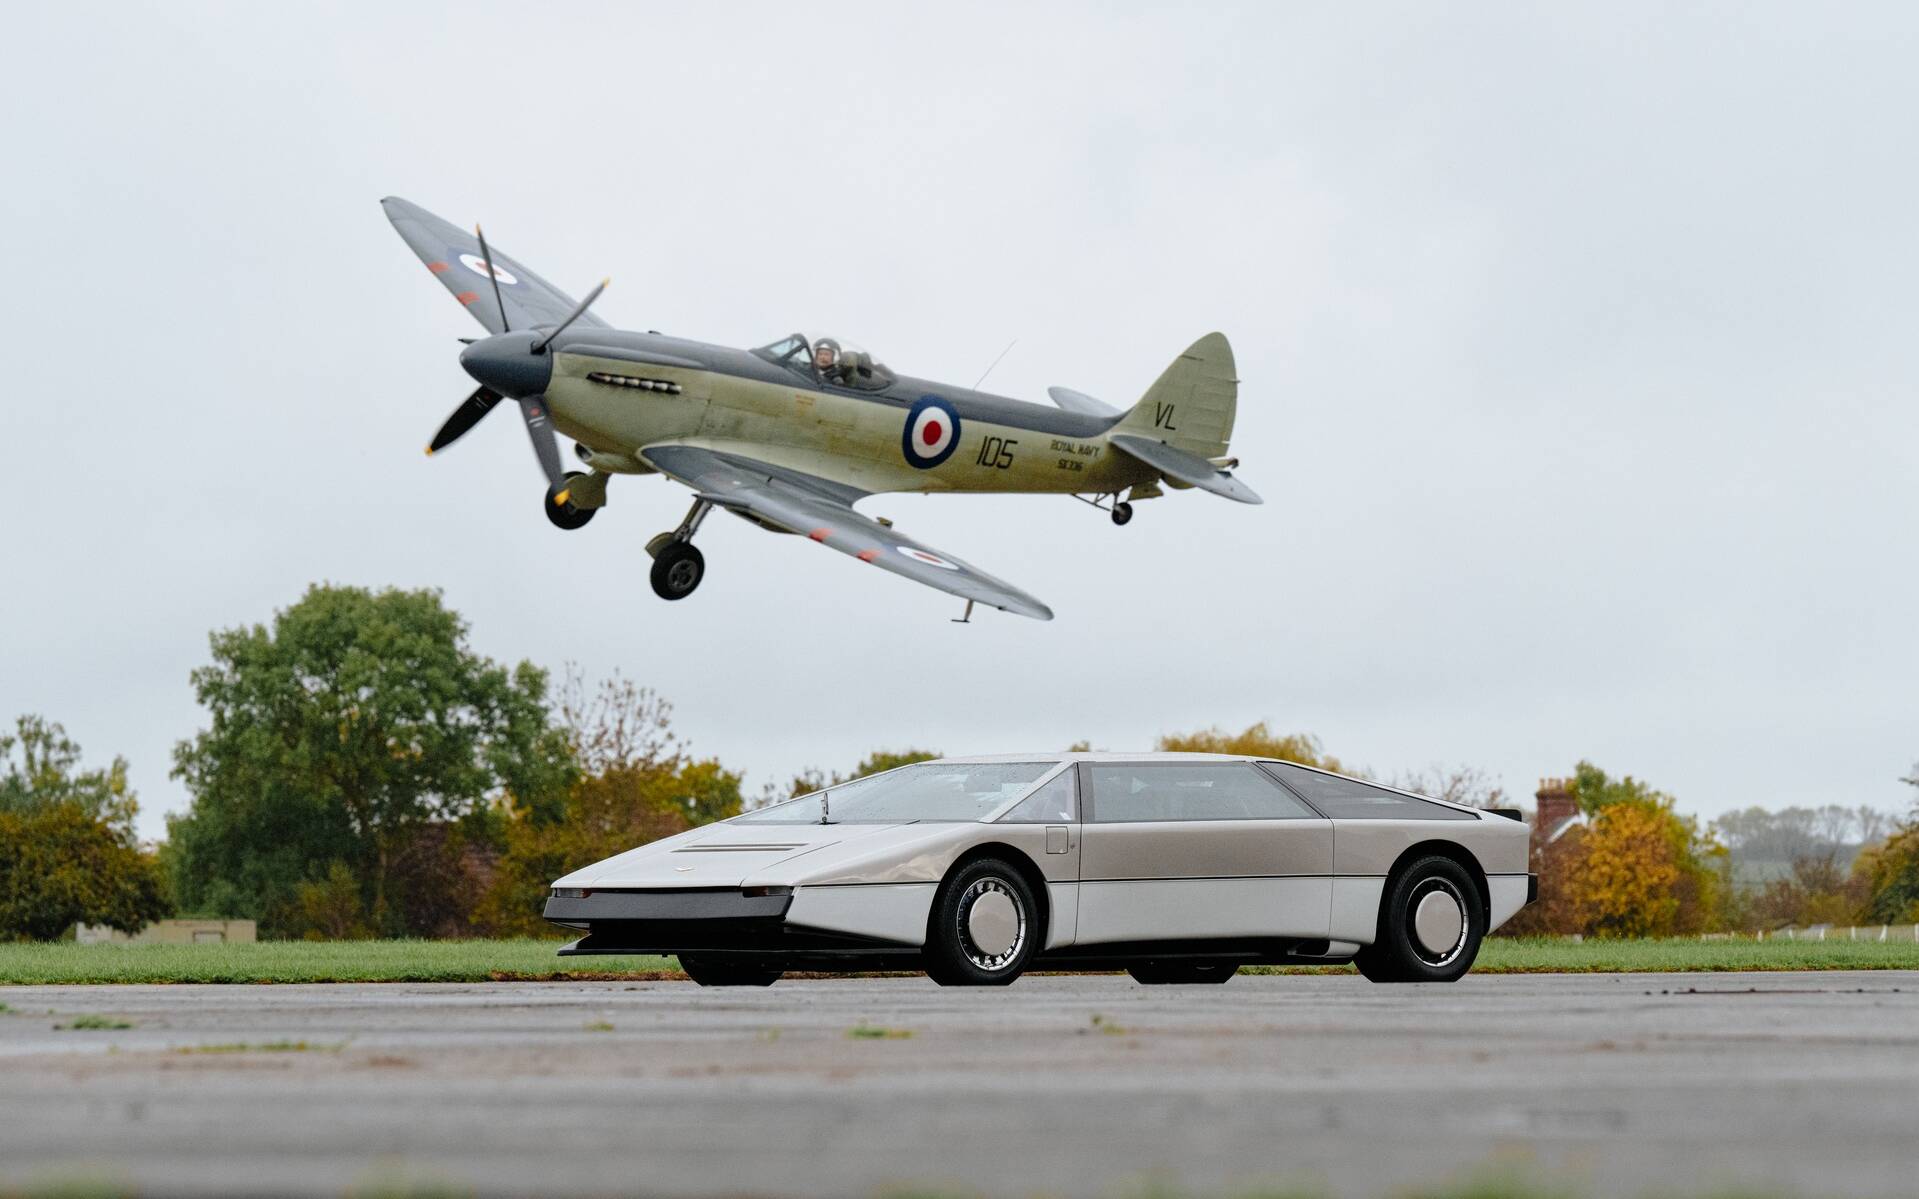 L’Aston Martin Bulldog atteint sa cible de 200 mi/h… 44 ans plus tard 575787-watch-aston-martin-bulldog-fulfills-dream-of-200-mph-44-years-later